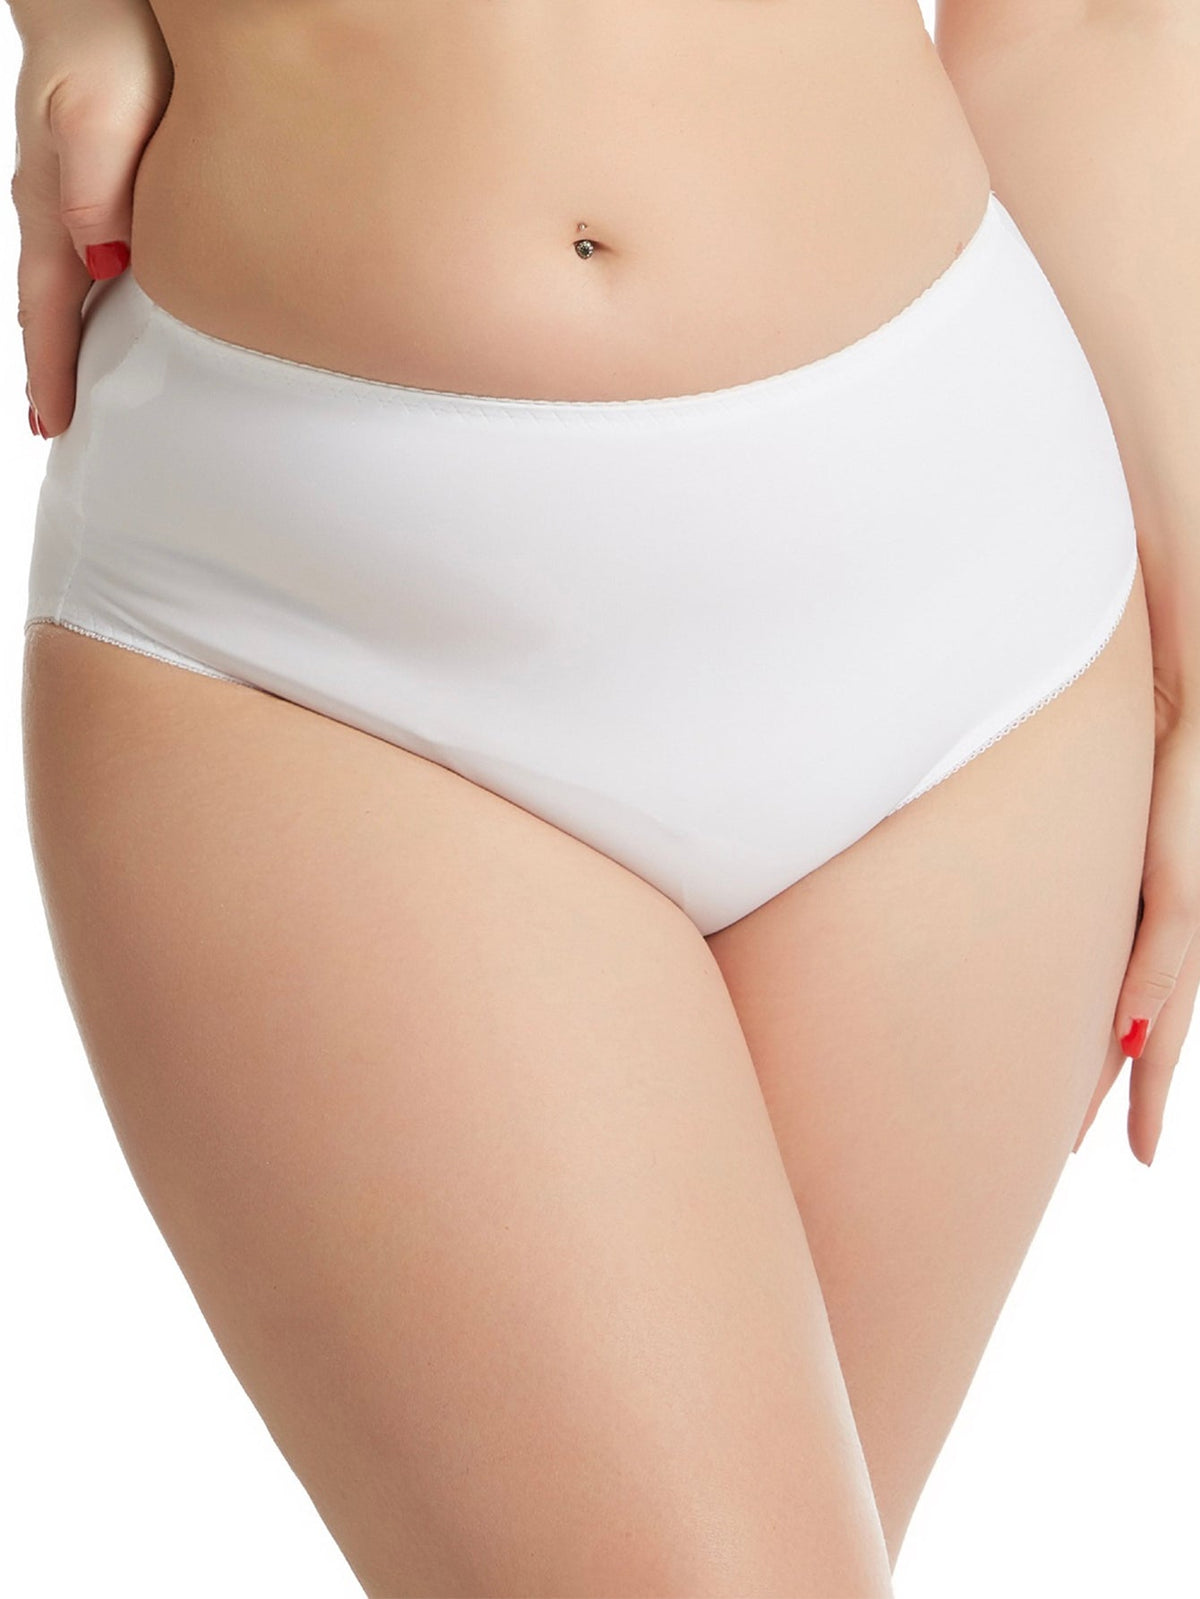 Large Size High Waist Panties For Women Underwear Big Size Briefs